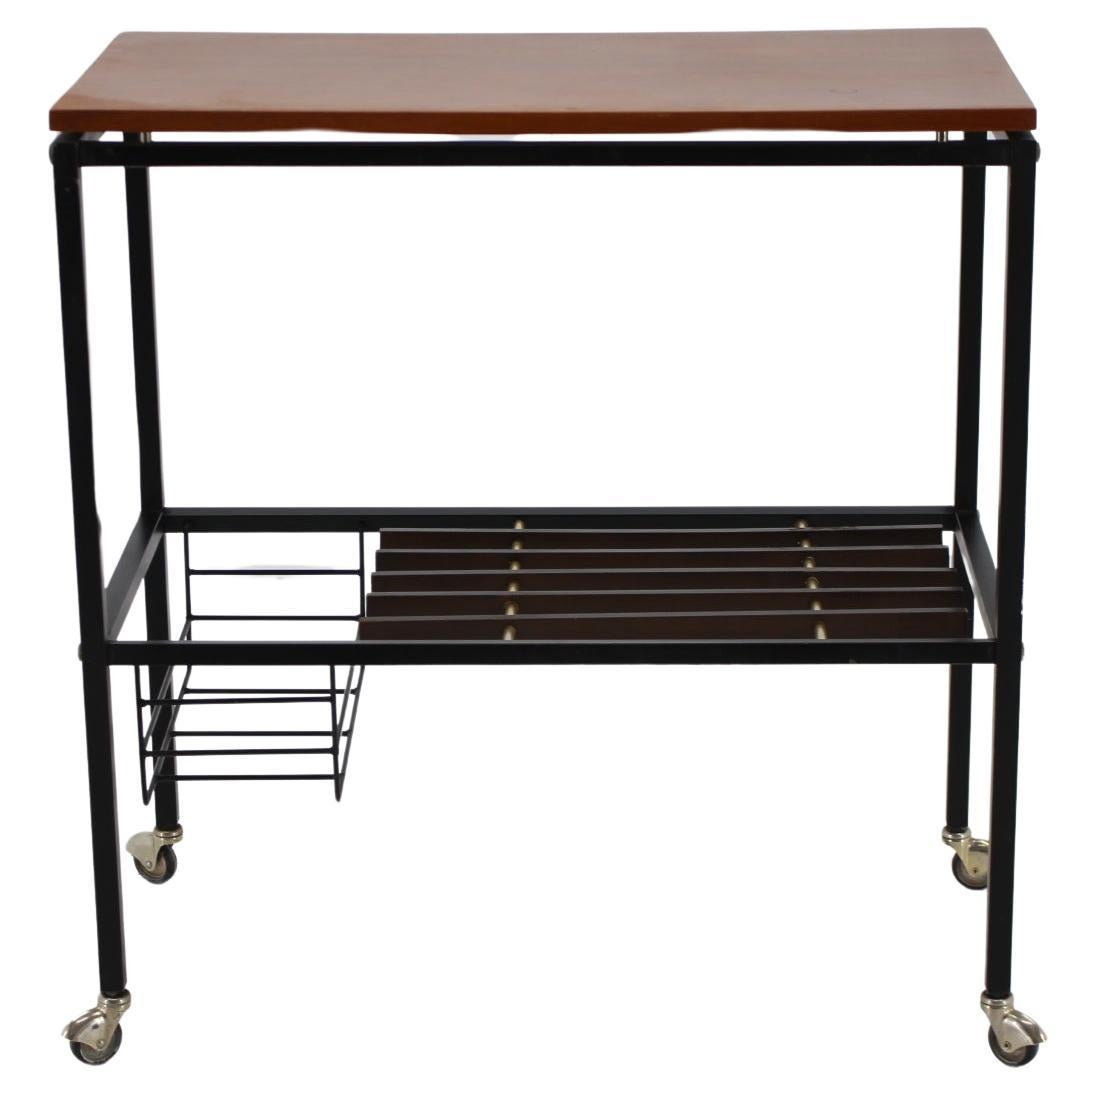 - mahogany veneered top desk 
- good / very good original condition
- H: 74,  W: 80,  D: 37 cm